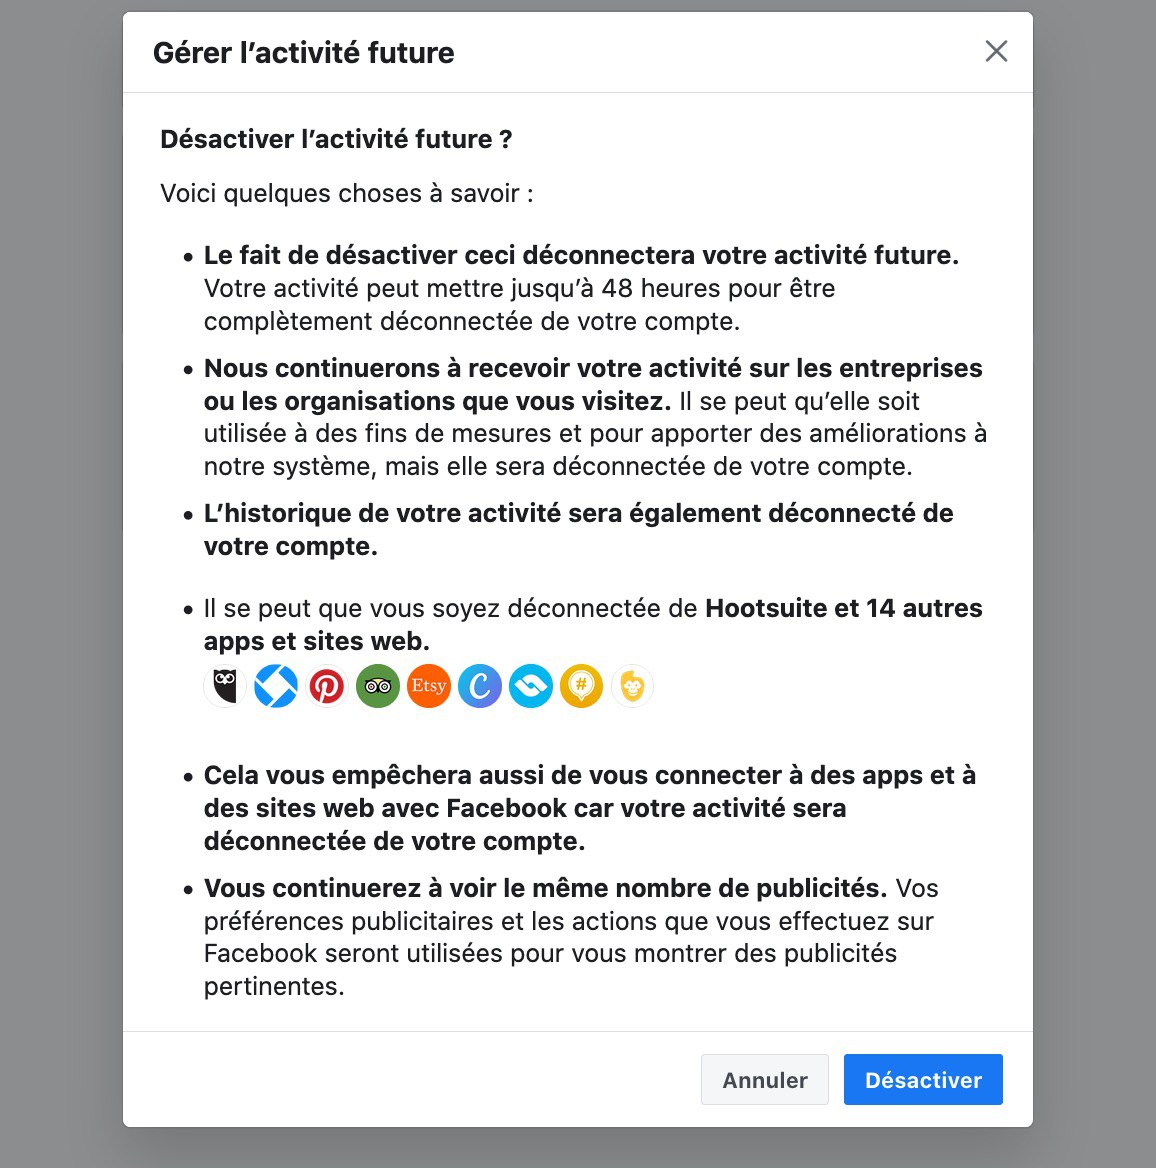 Facebook outil activité hors facebook